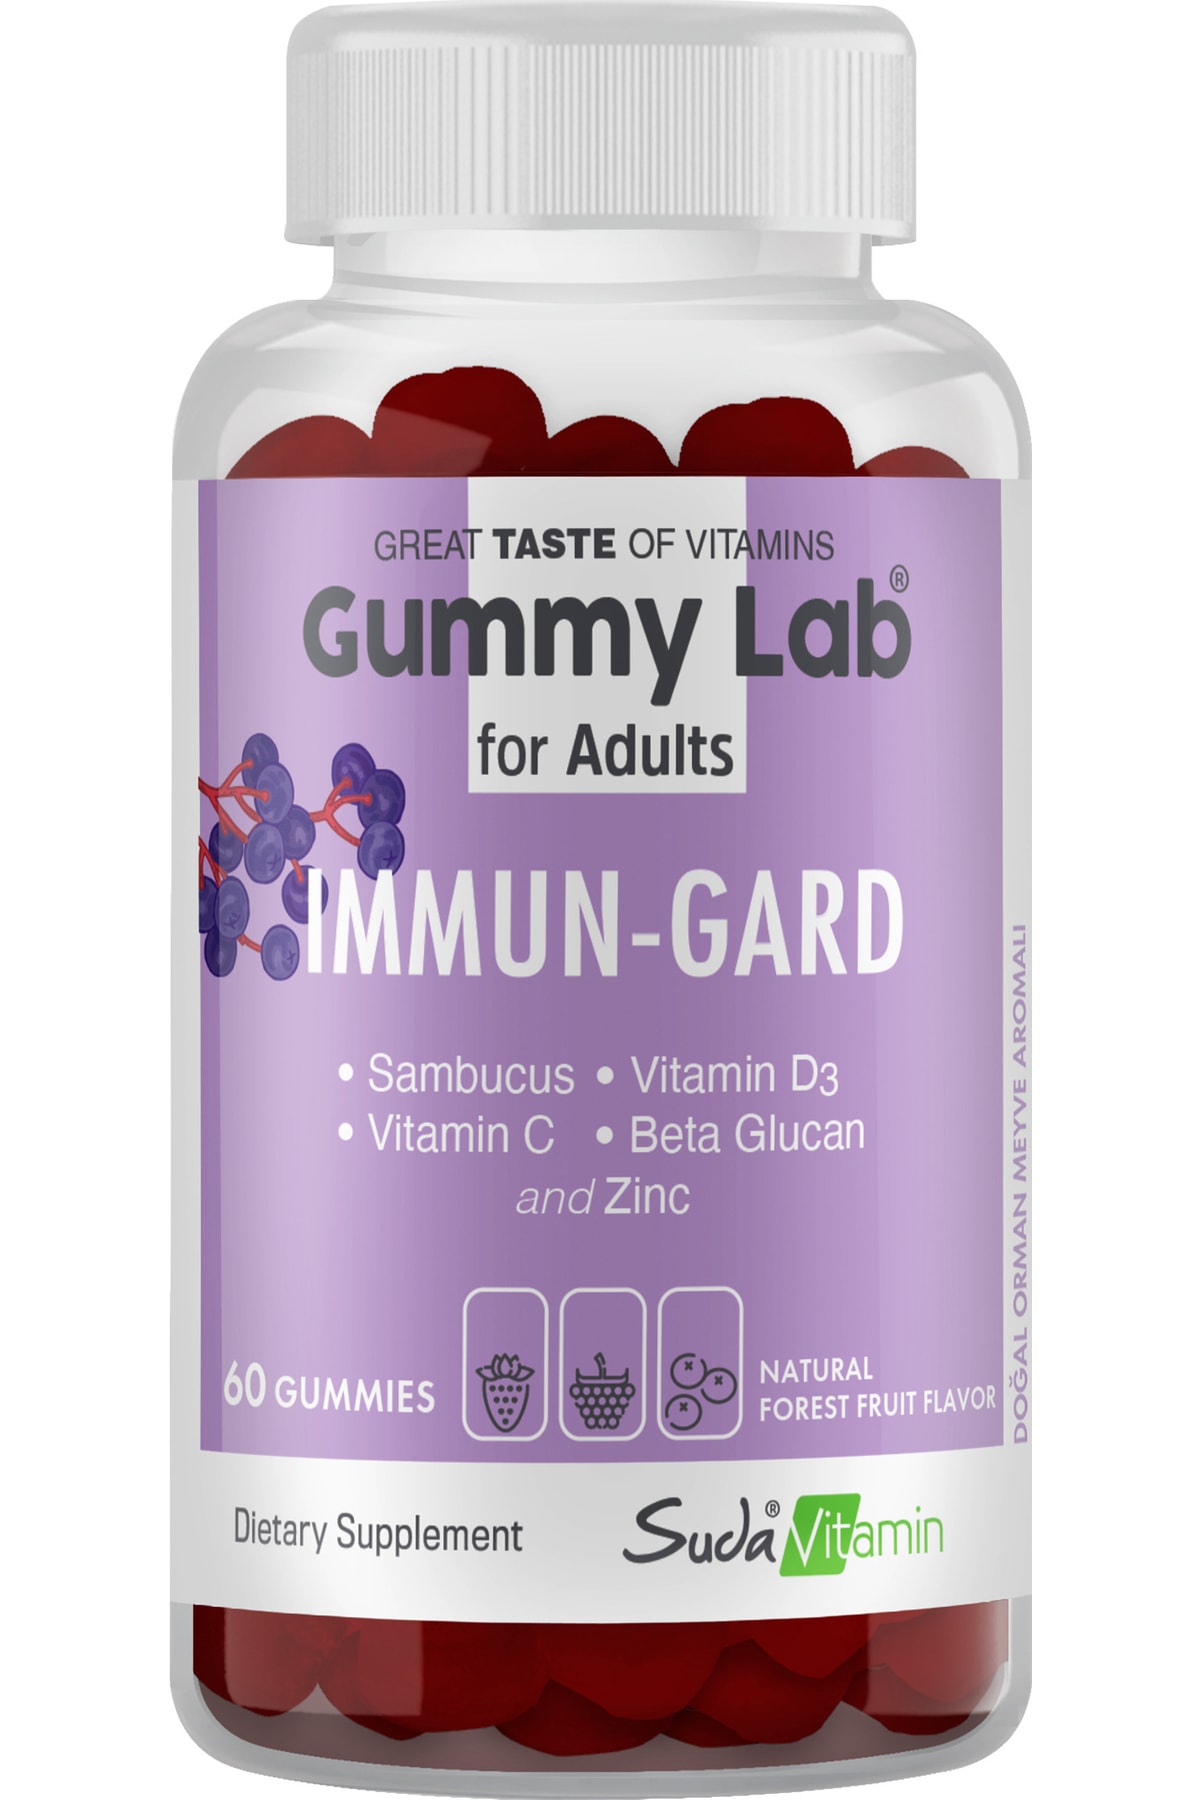 Suda Vitamin Gummylab Immun Gard For Adults Orman Mey. 60 Gummies